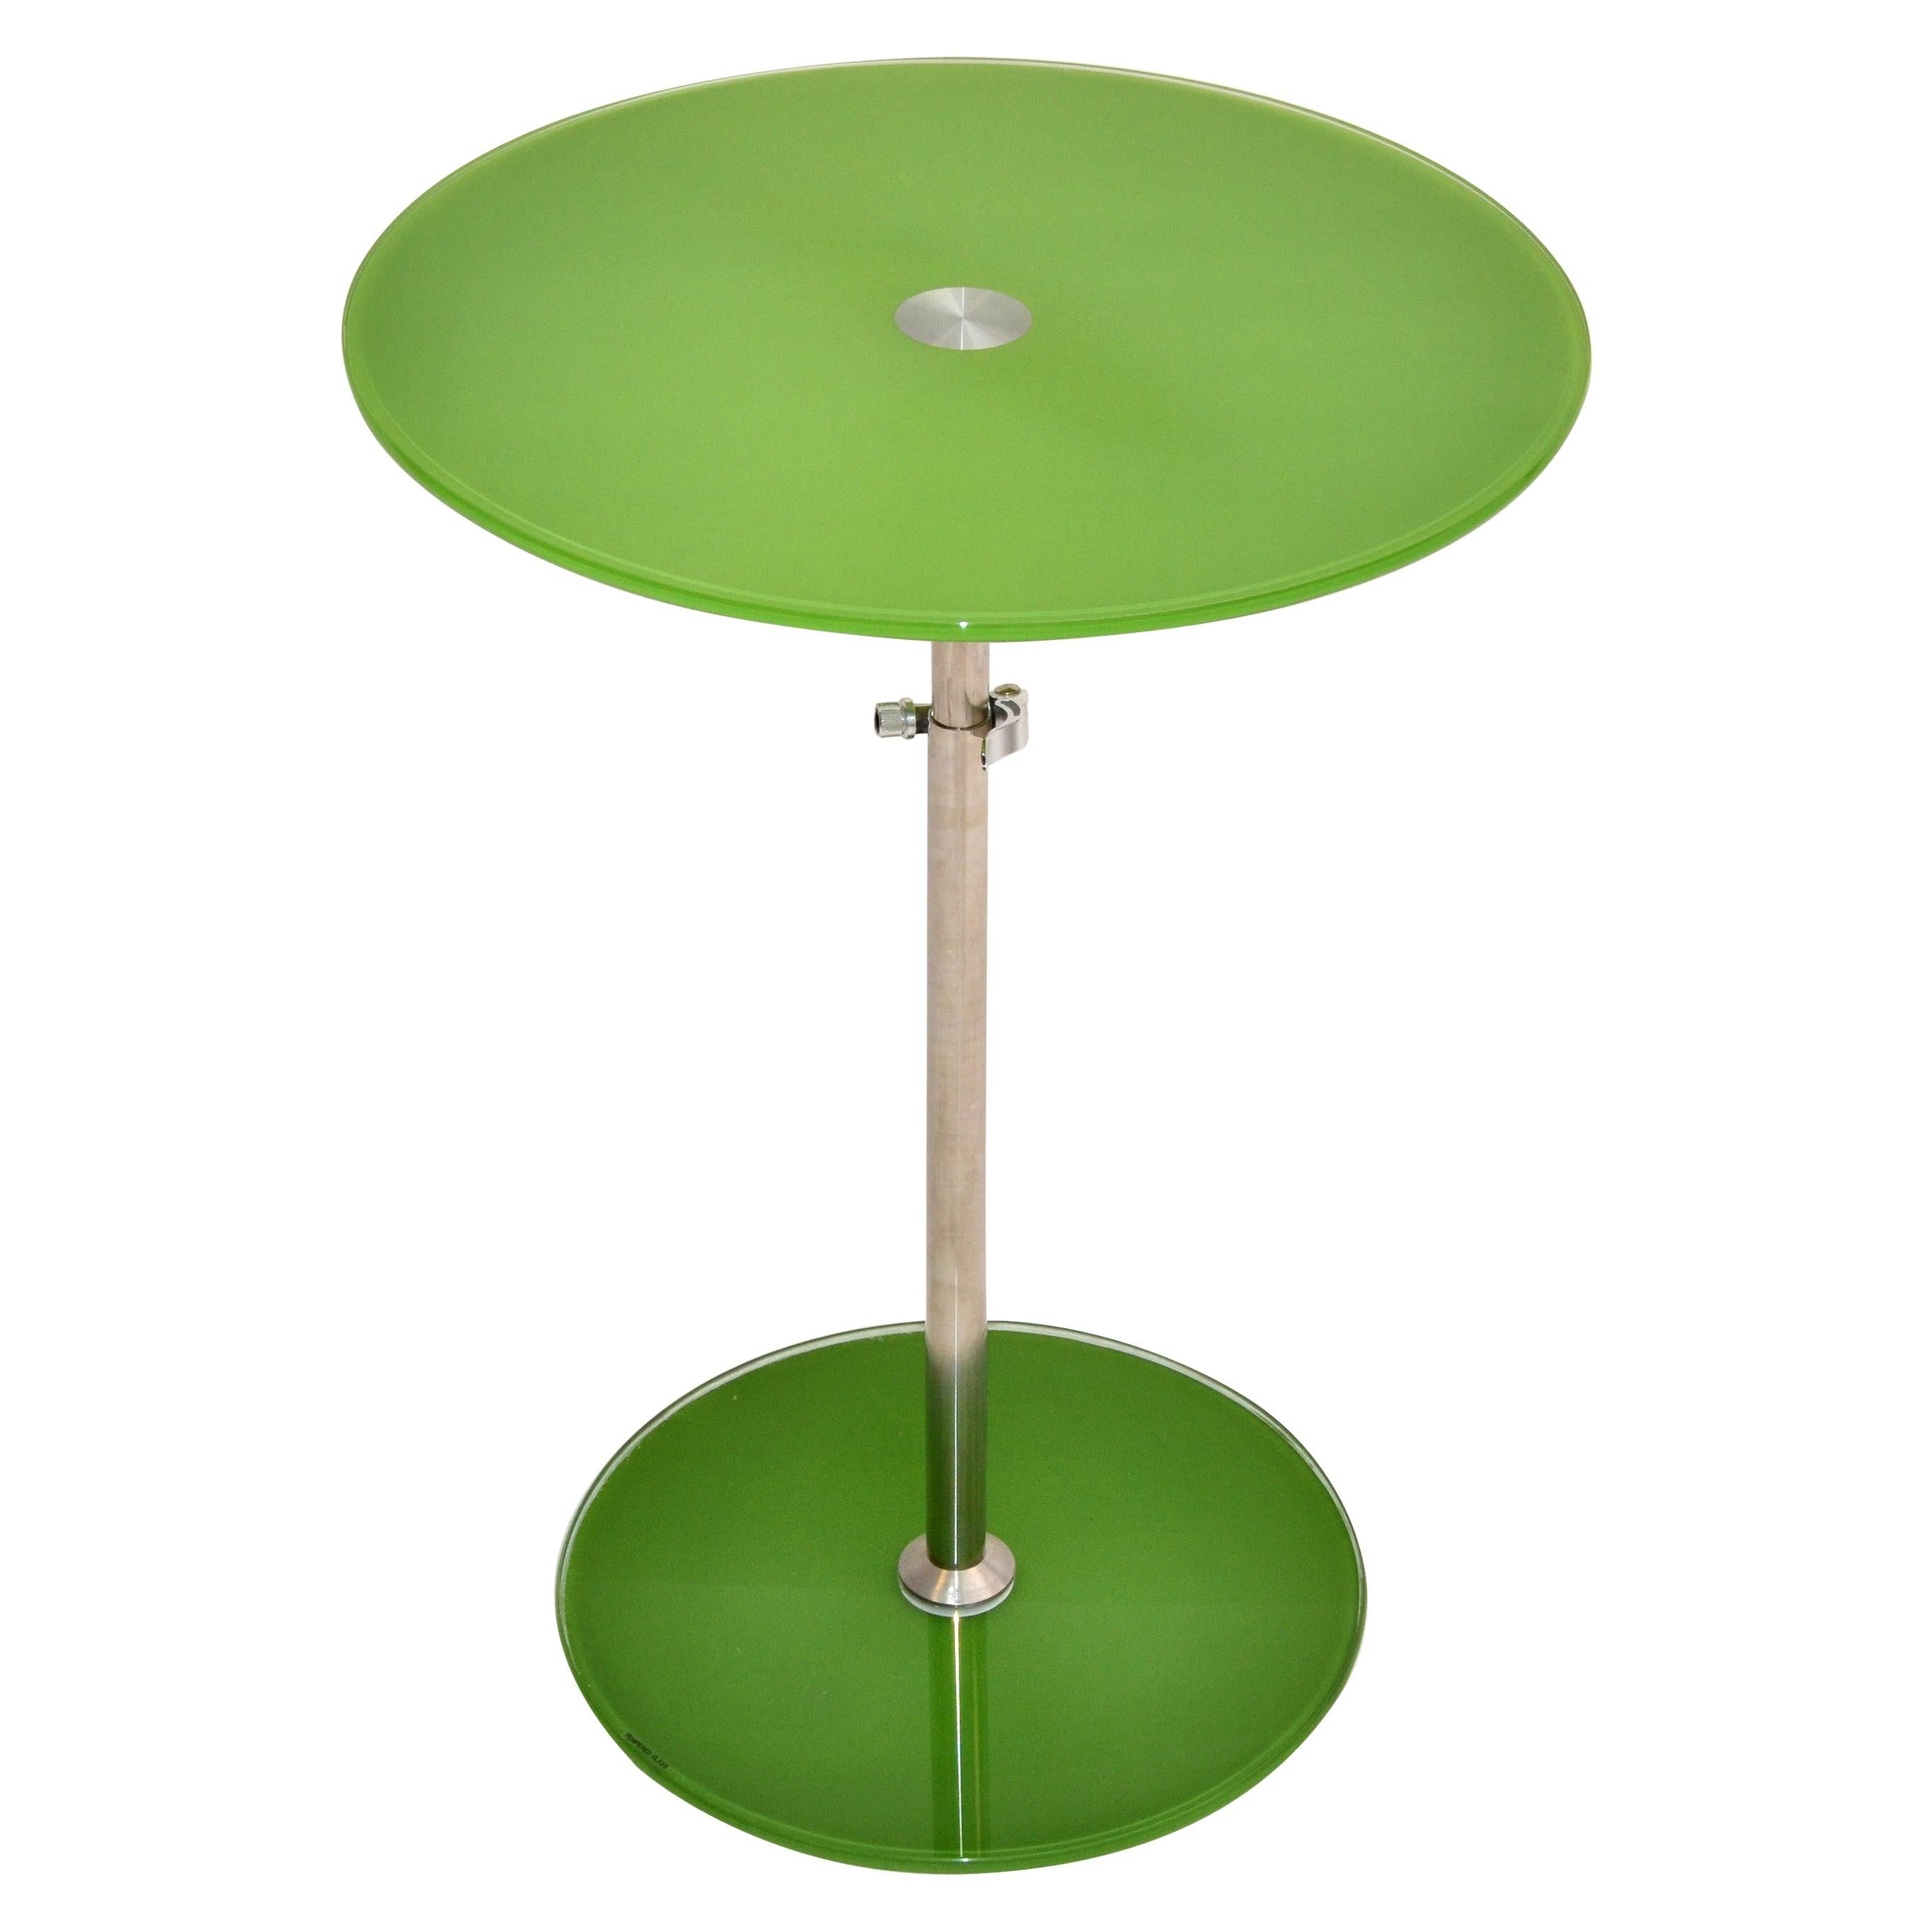 Modern Adjustable Green Tempered Glass & Brushed Steel Side Table, Bistro Table